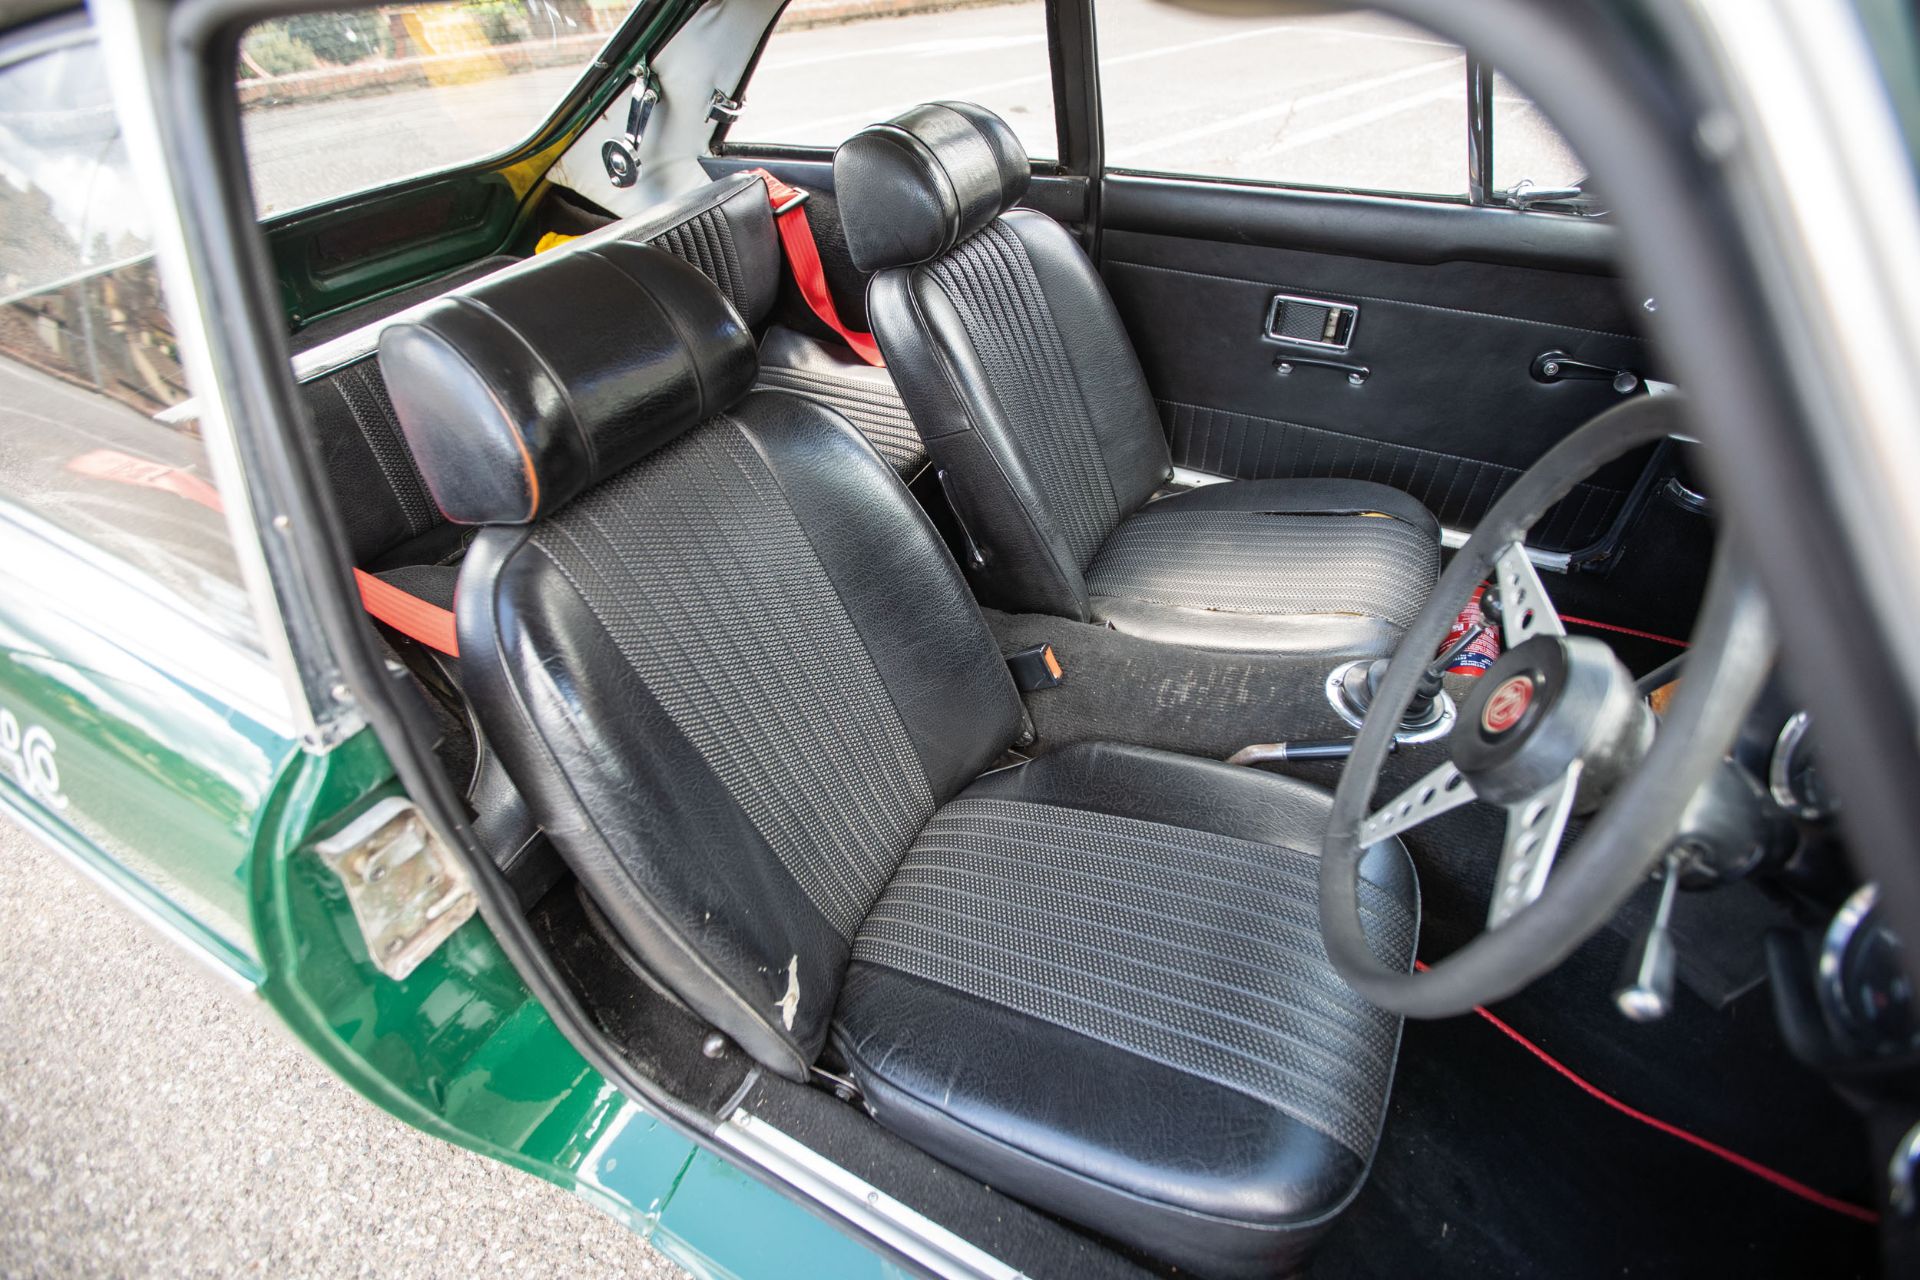 1970 MG B GT - Image 5 of 6